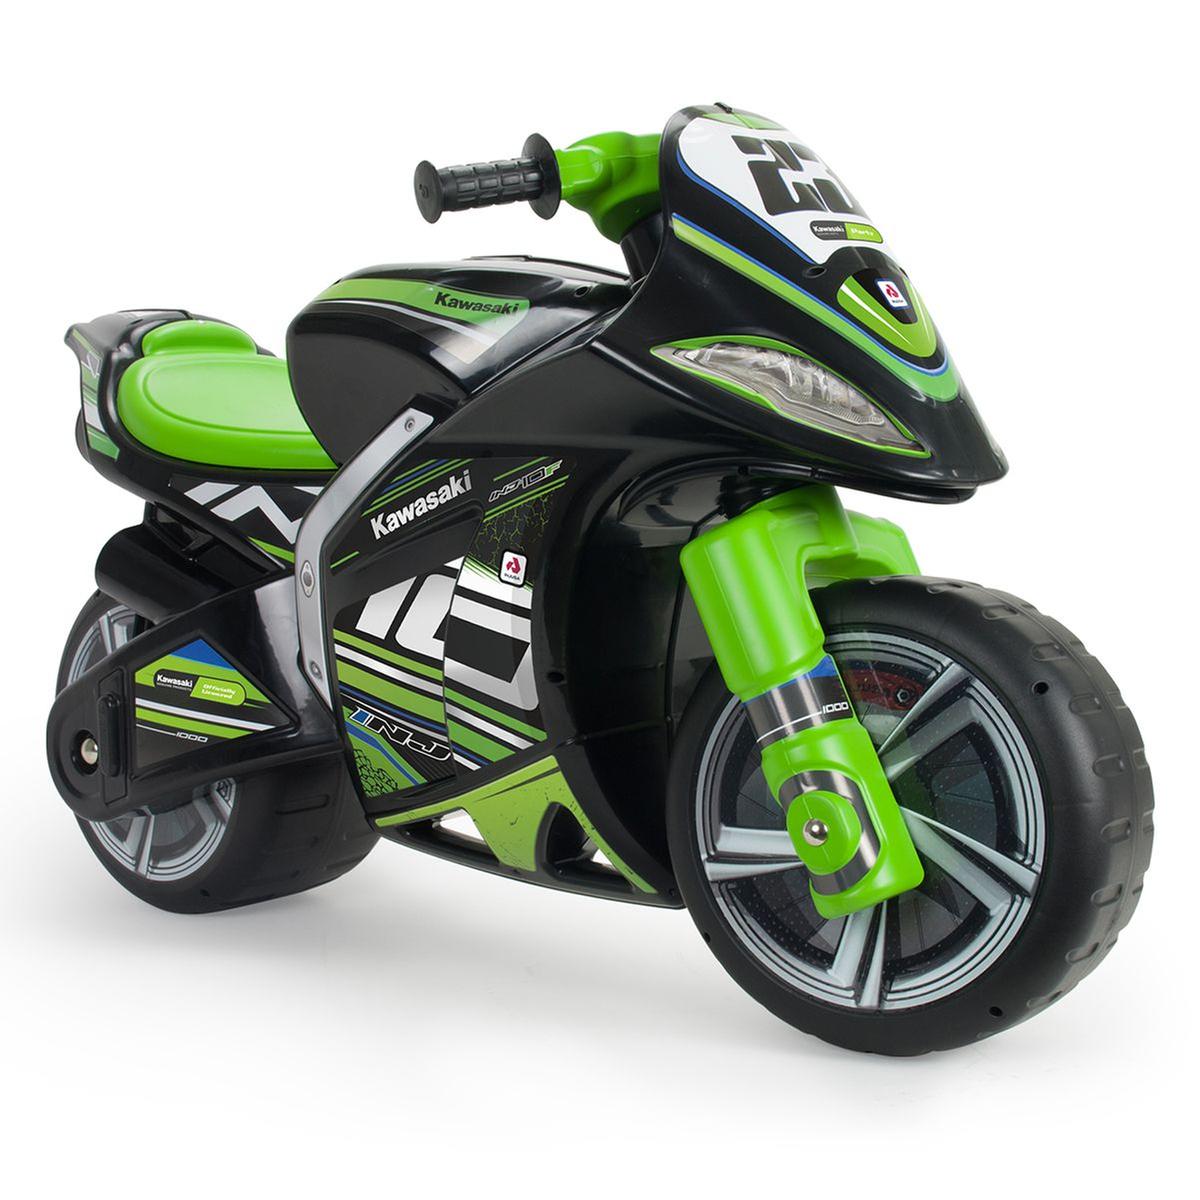 Kawasaki motocicletas Venezuela 2022 Injusa - Moto Correpasillos Kawasaki | Rideon | Toys"R"Us España